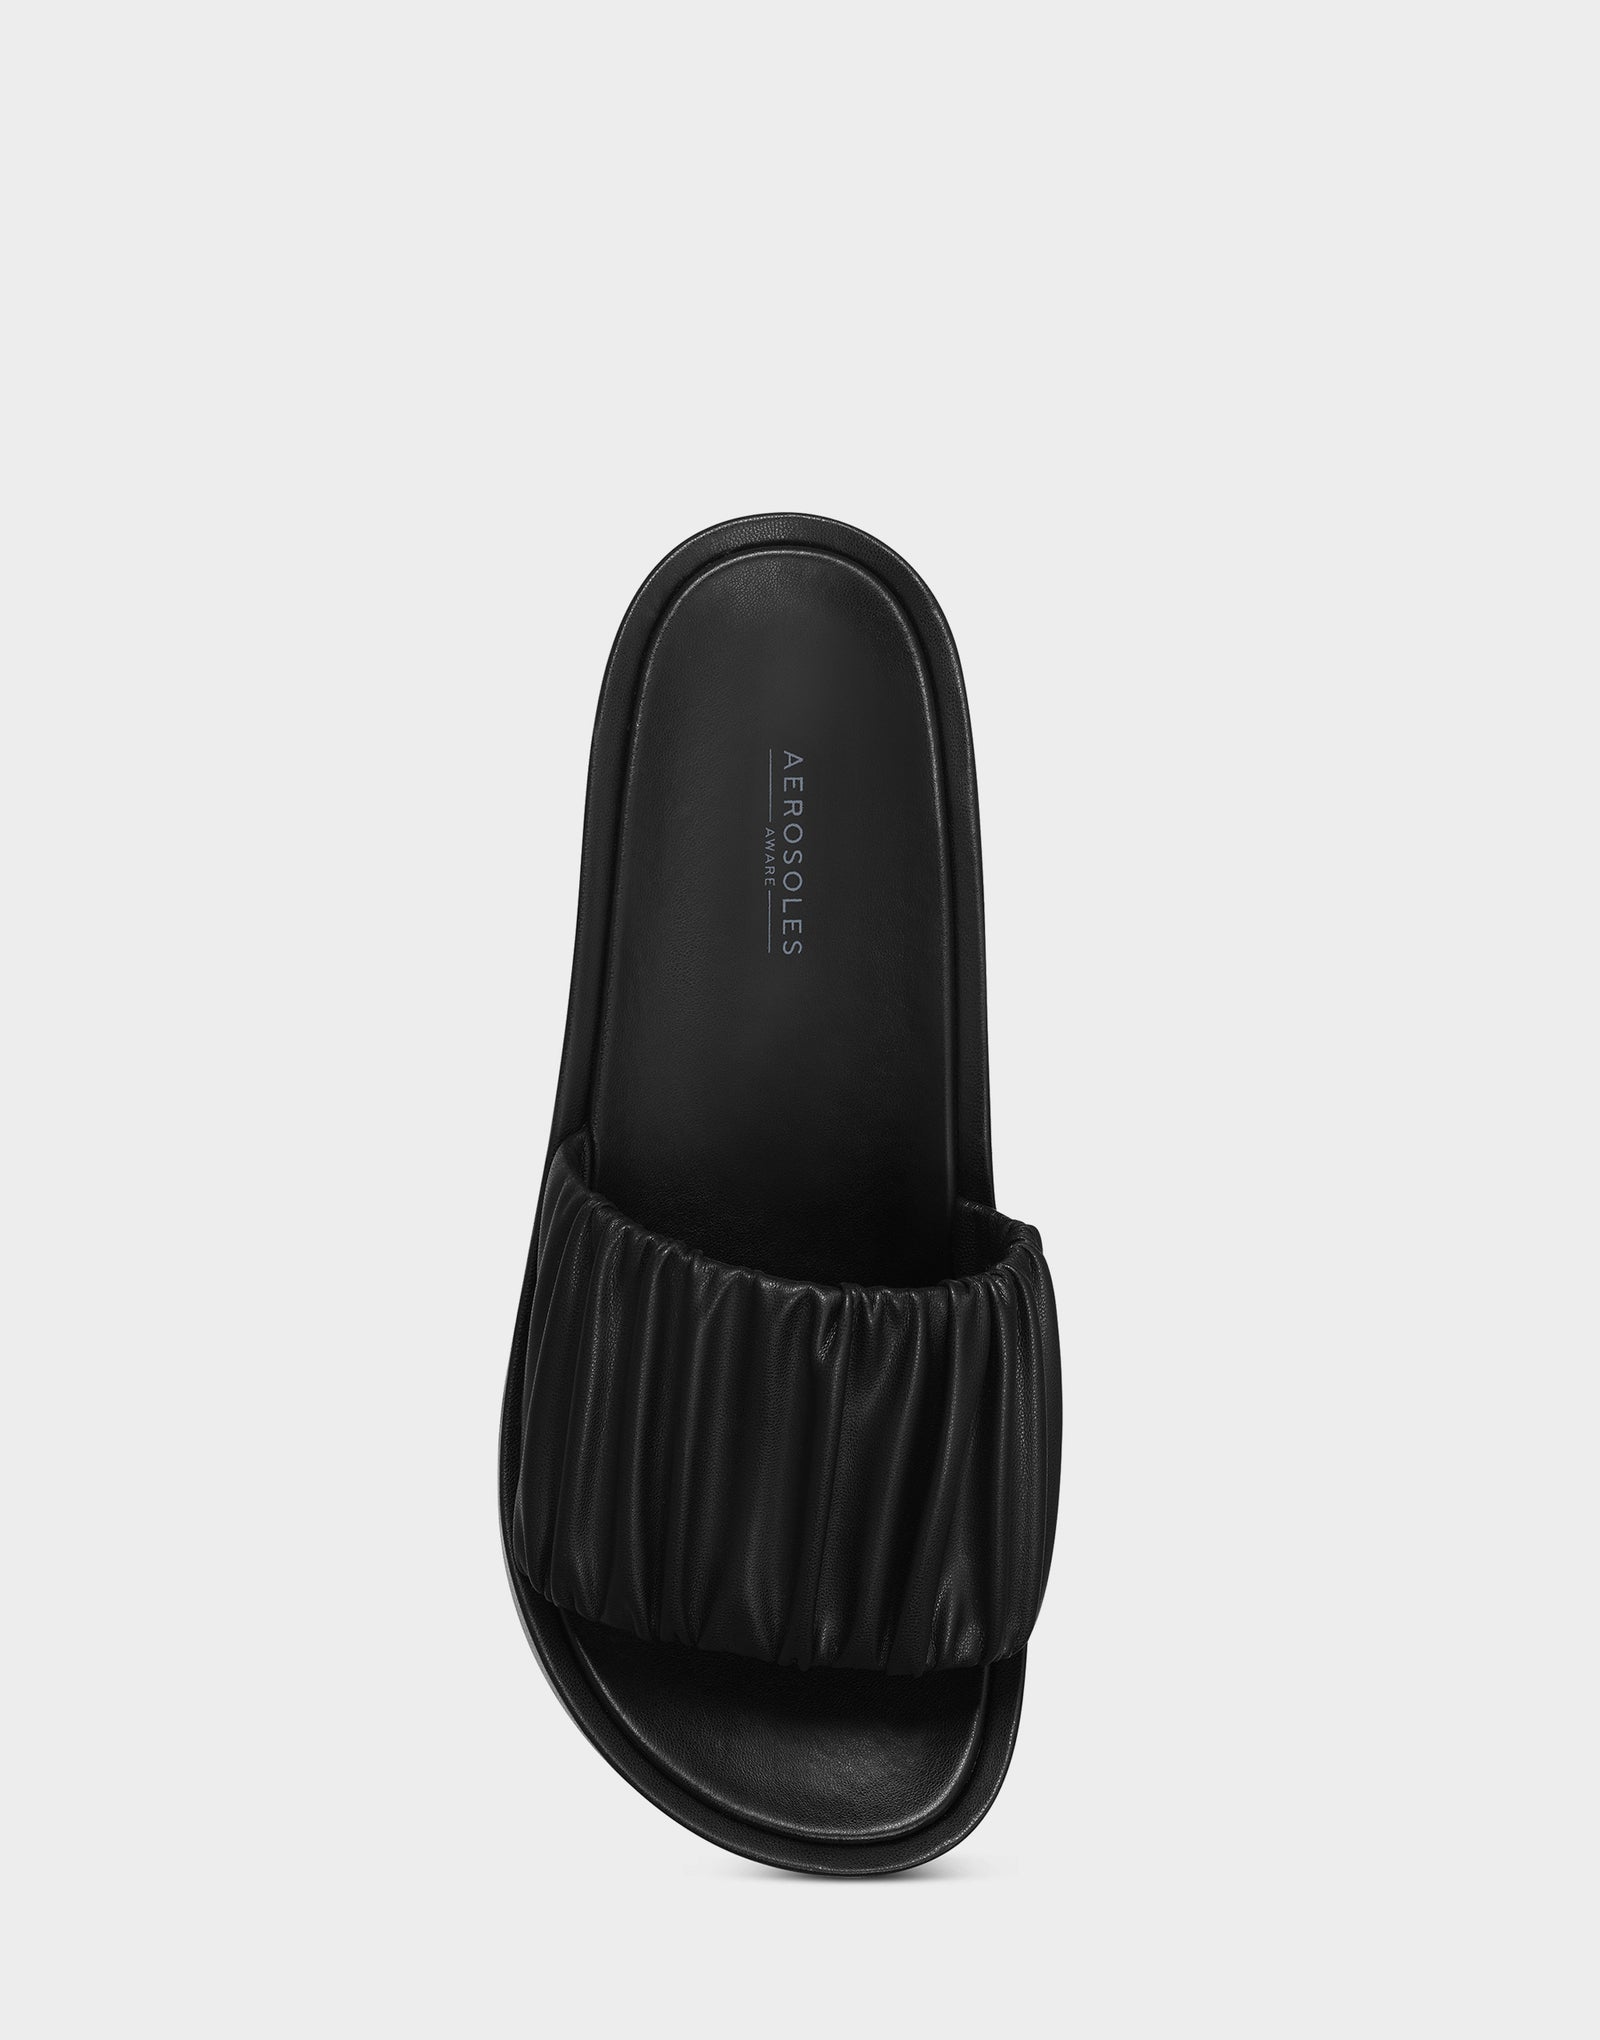 Women's Sandal in Black